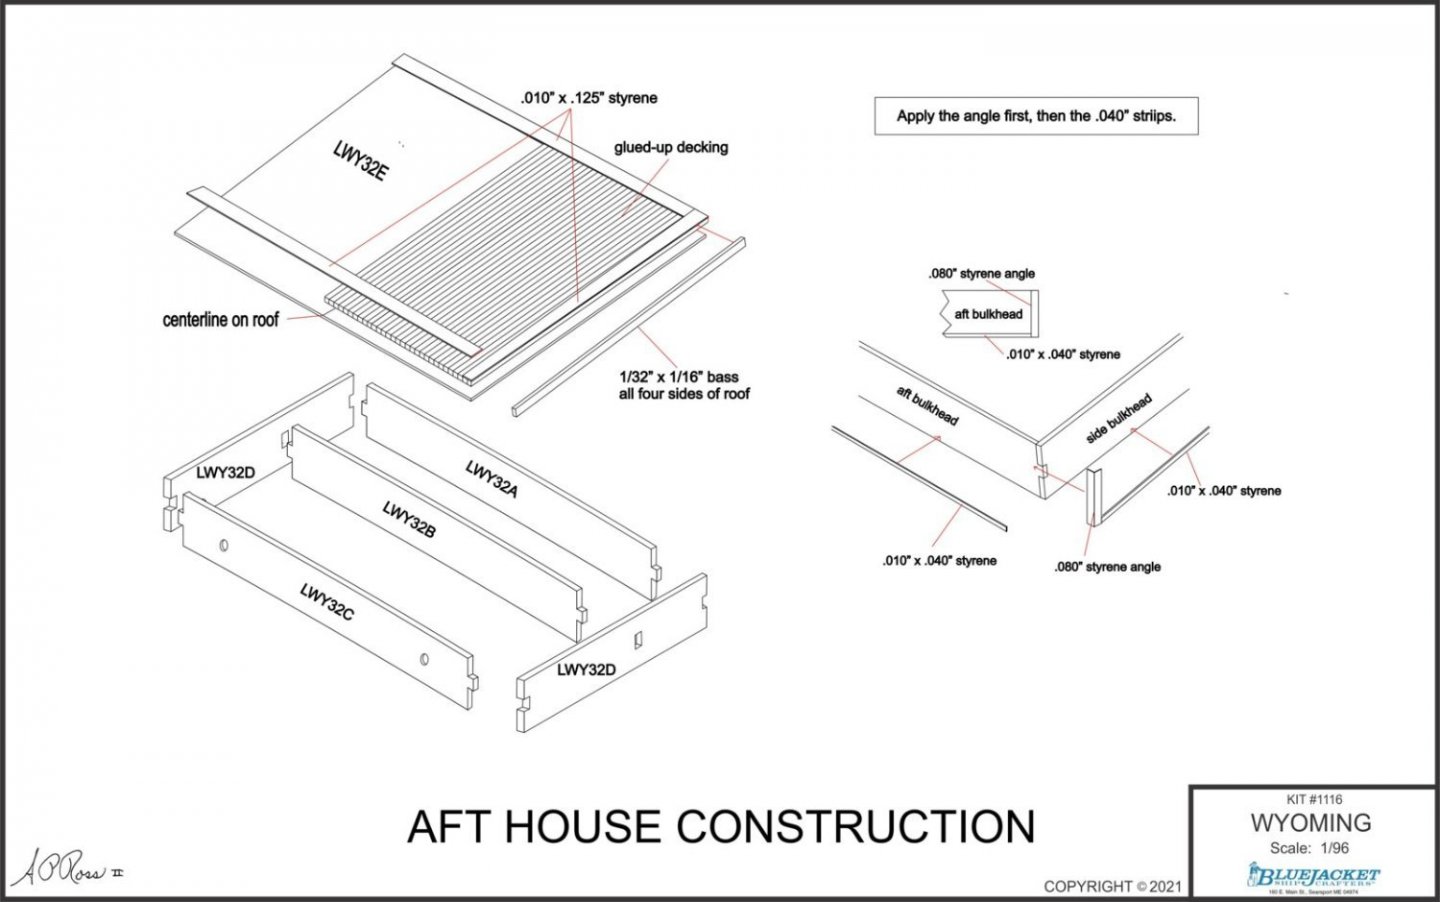 AFT HOUSE CONSTRUCTION.jpg